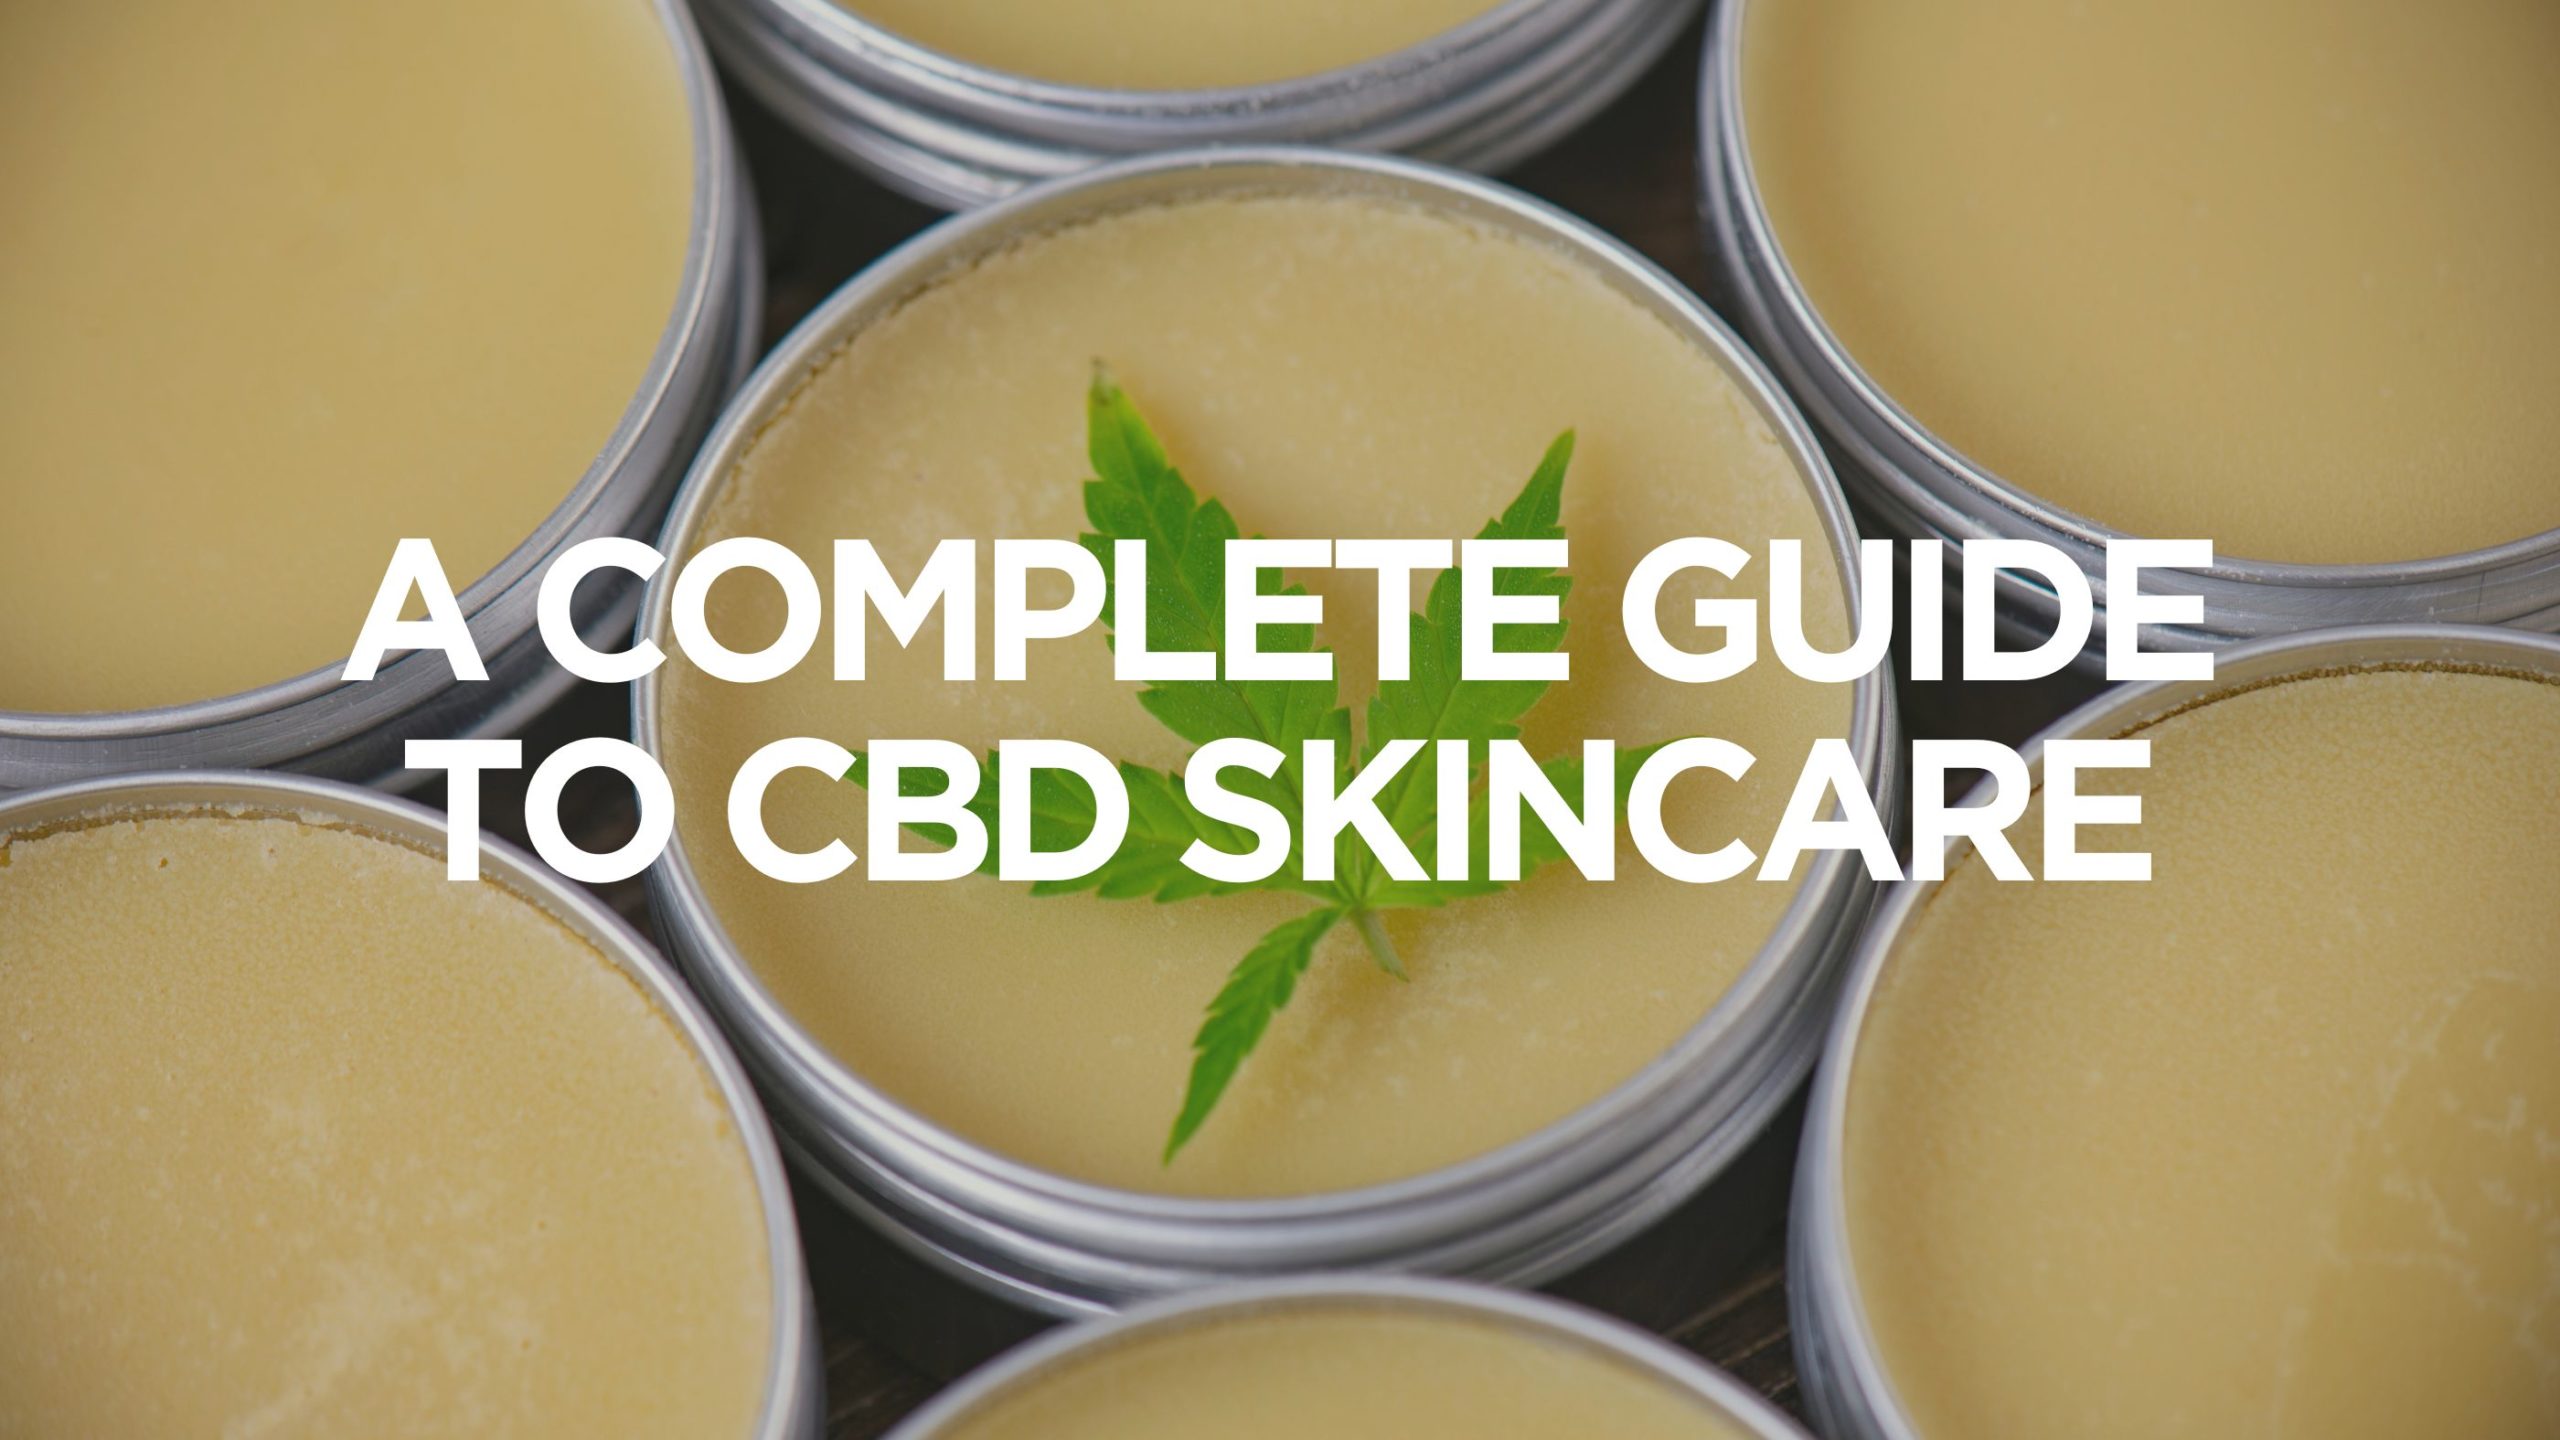 A Complete Guide to CBD Skincare